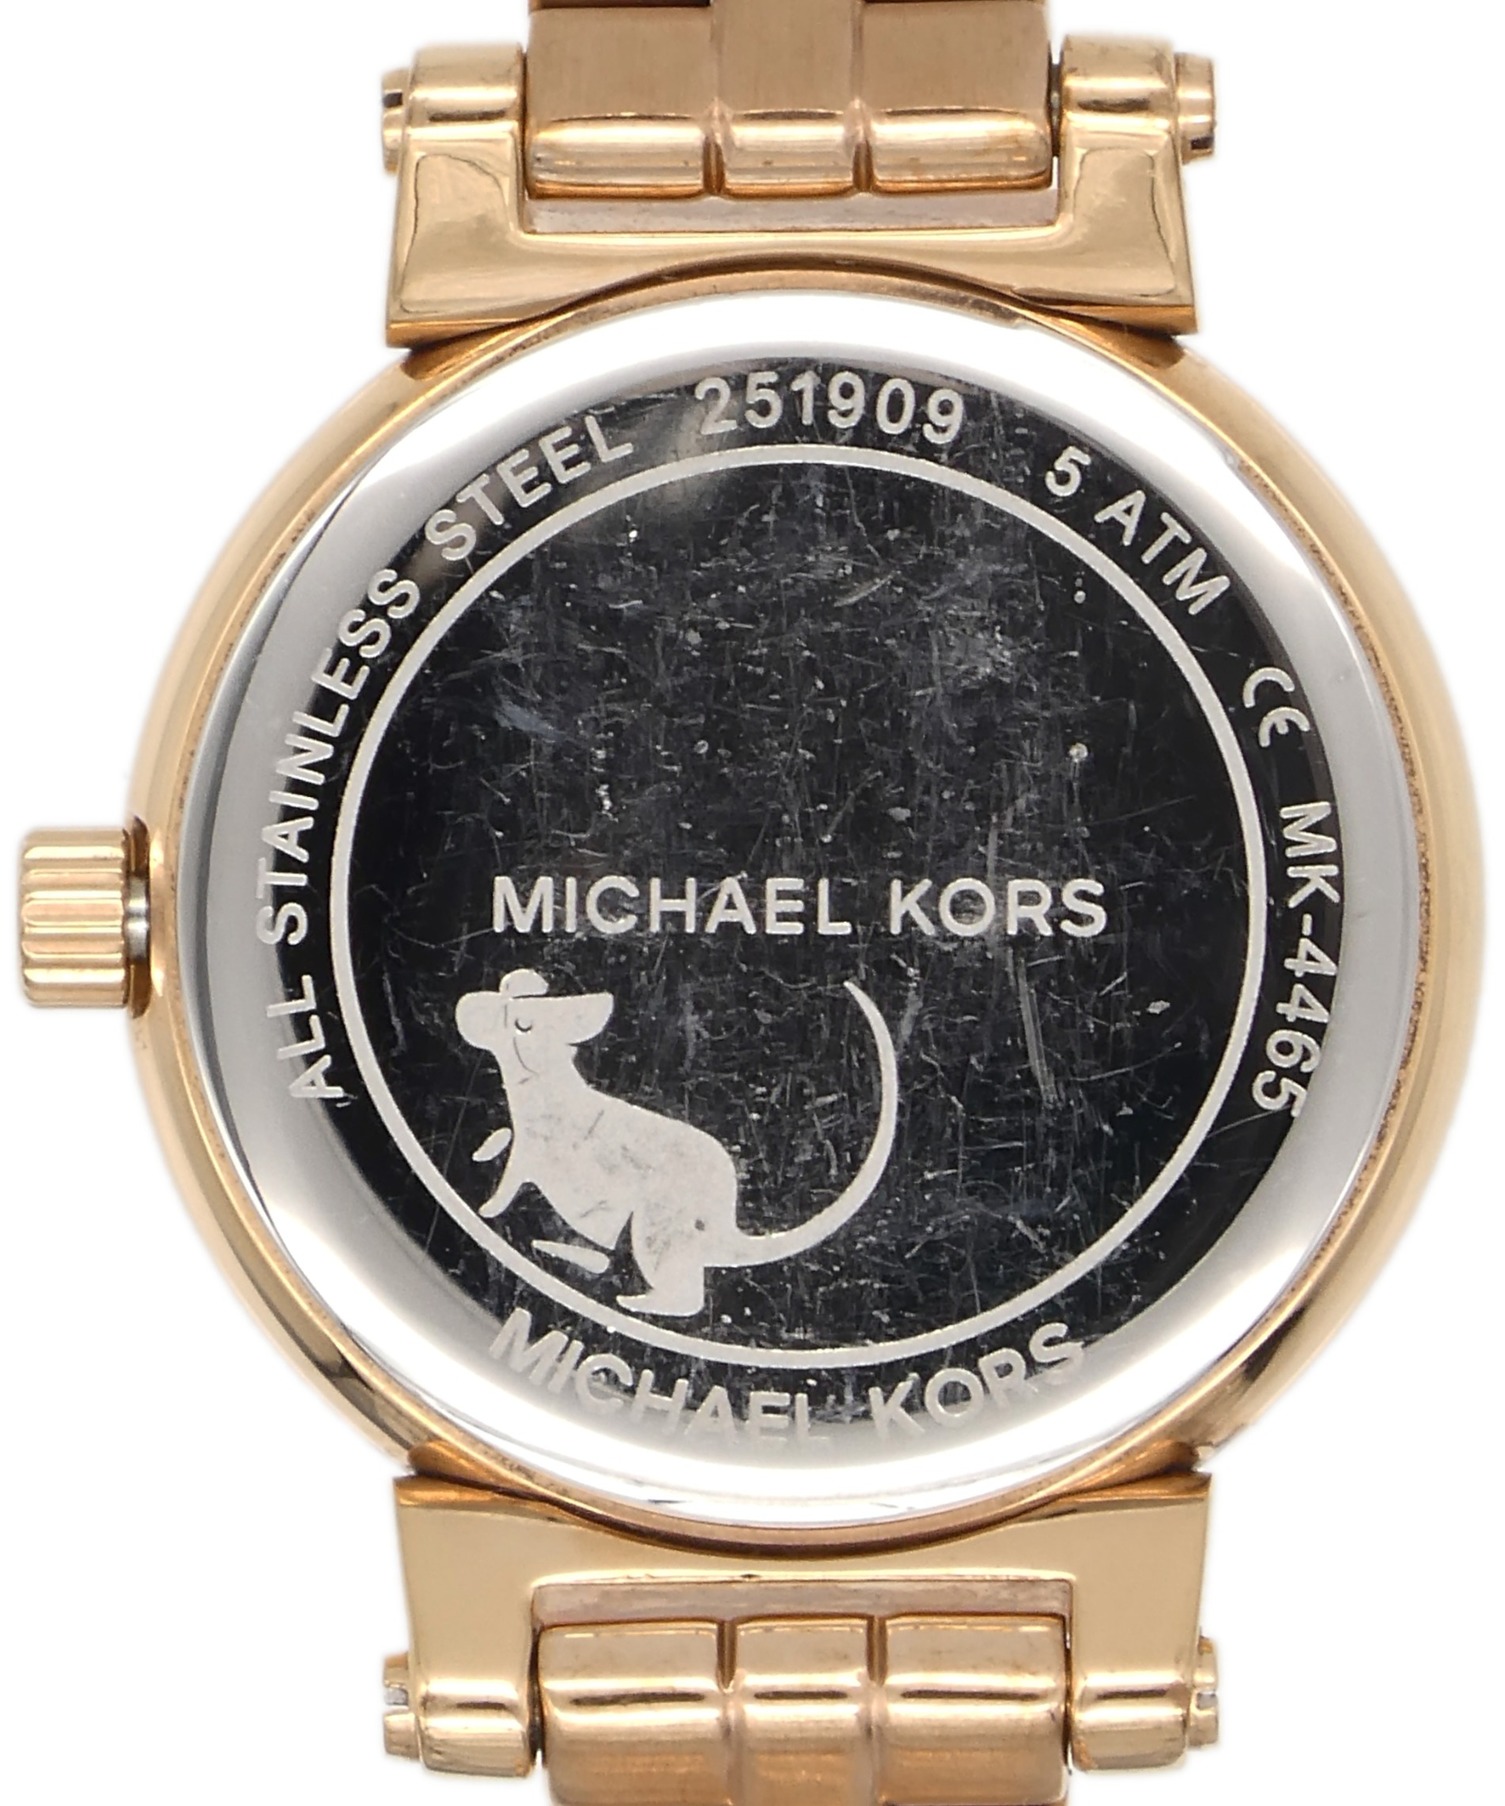 MICHAEL KORS (マイケルコース) Sofie ソフィー 腕時計 ローズゴールド サイズ:腕回り約15cm